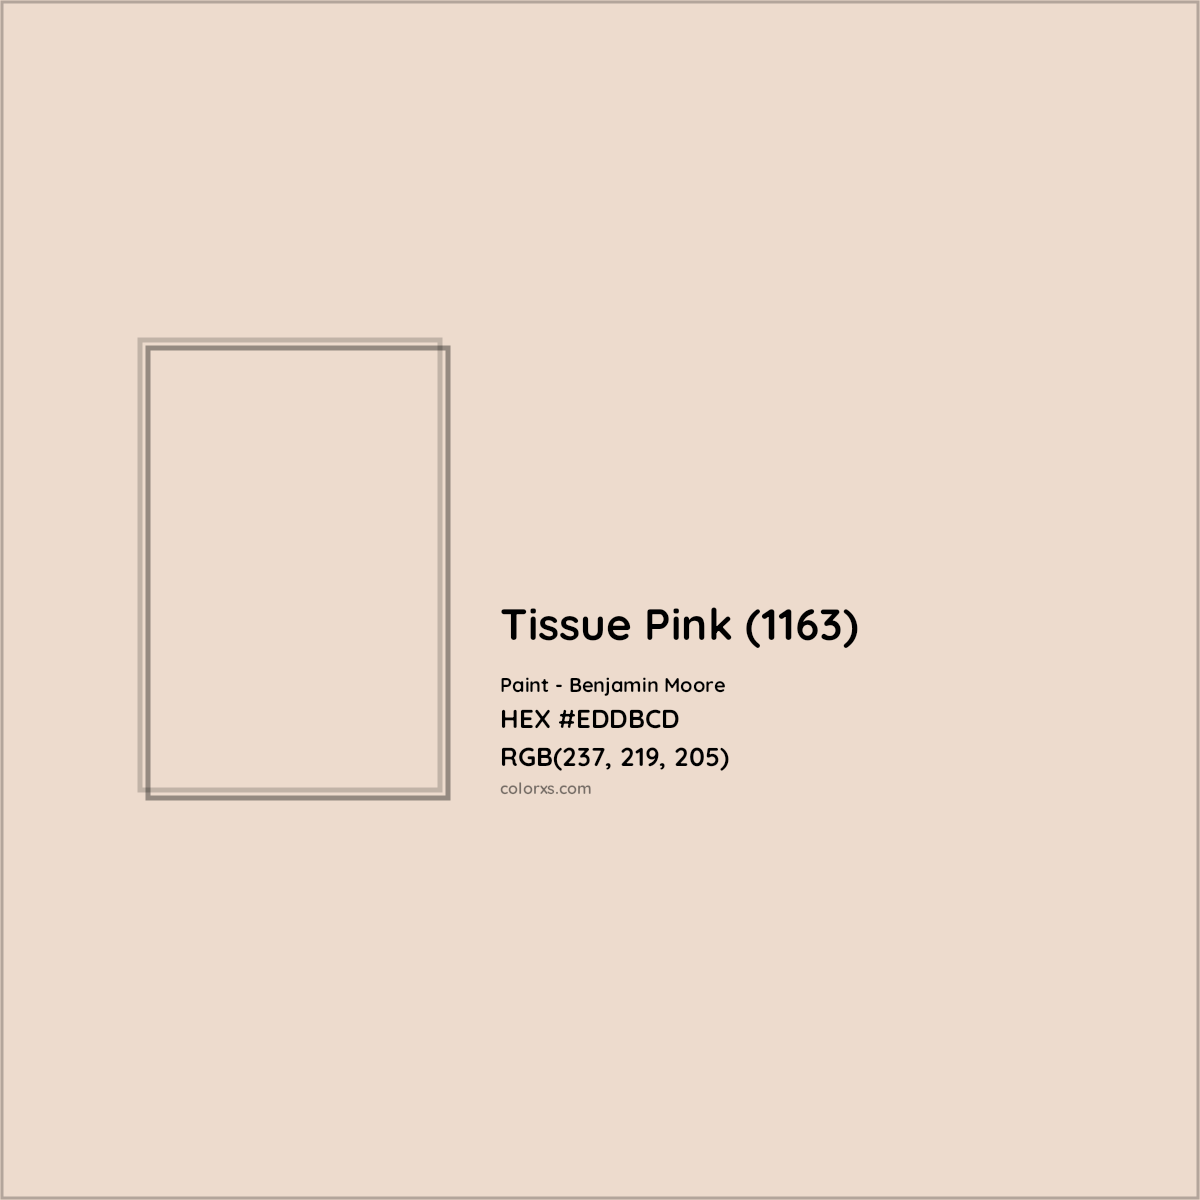 HEX #EDDBCD Tissue Pink (1163) Paint Benjamin Moore - Color Code